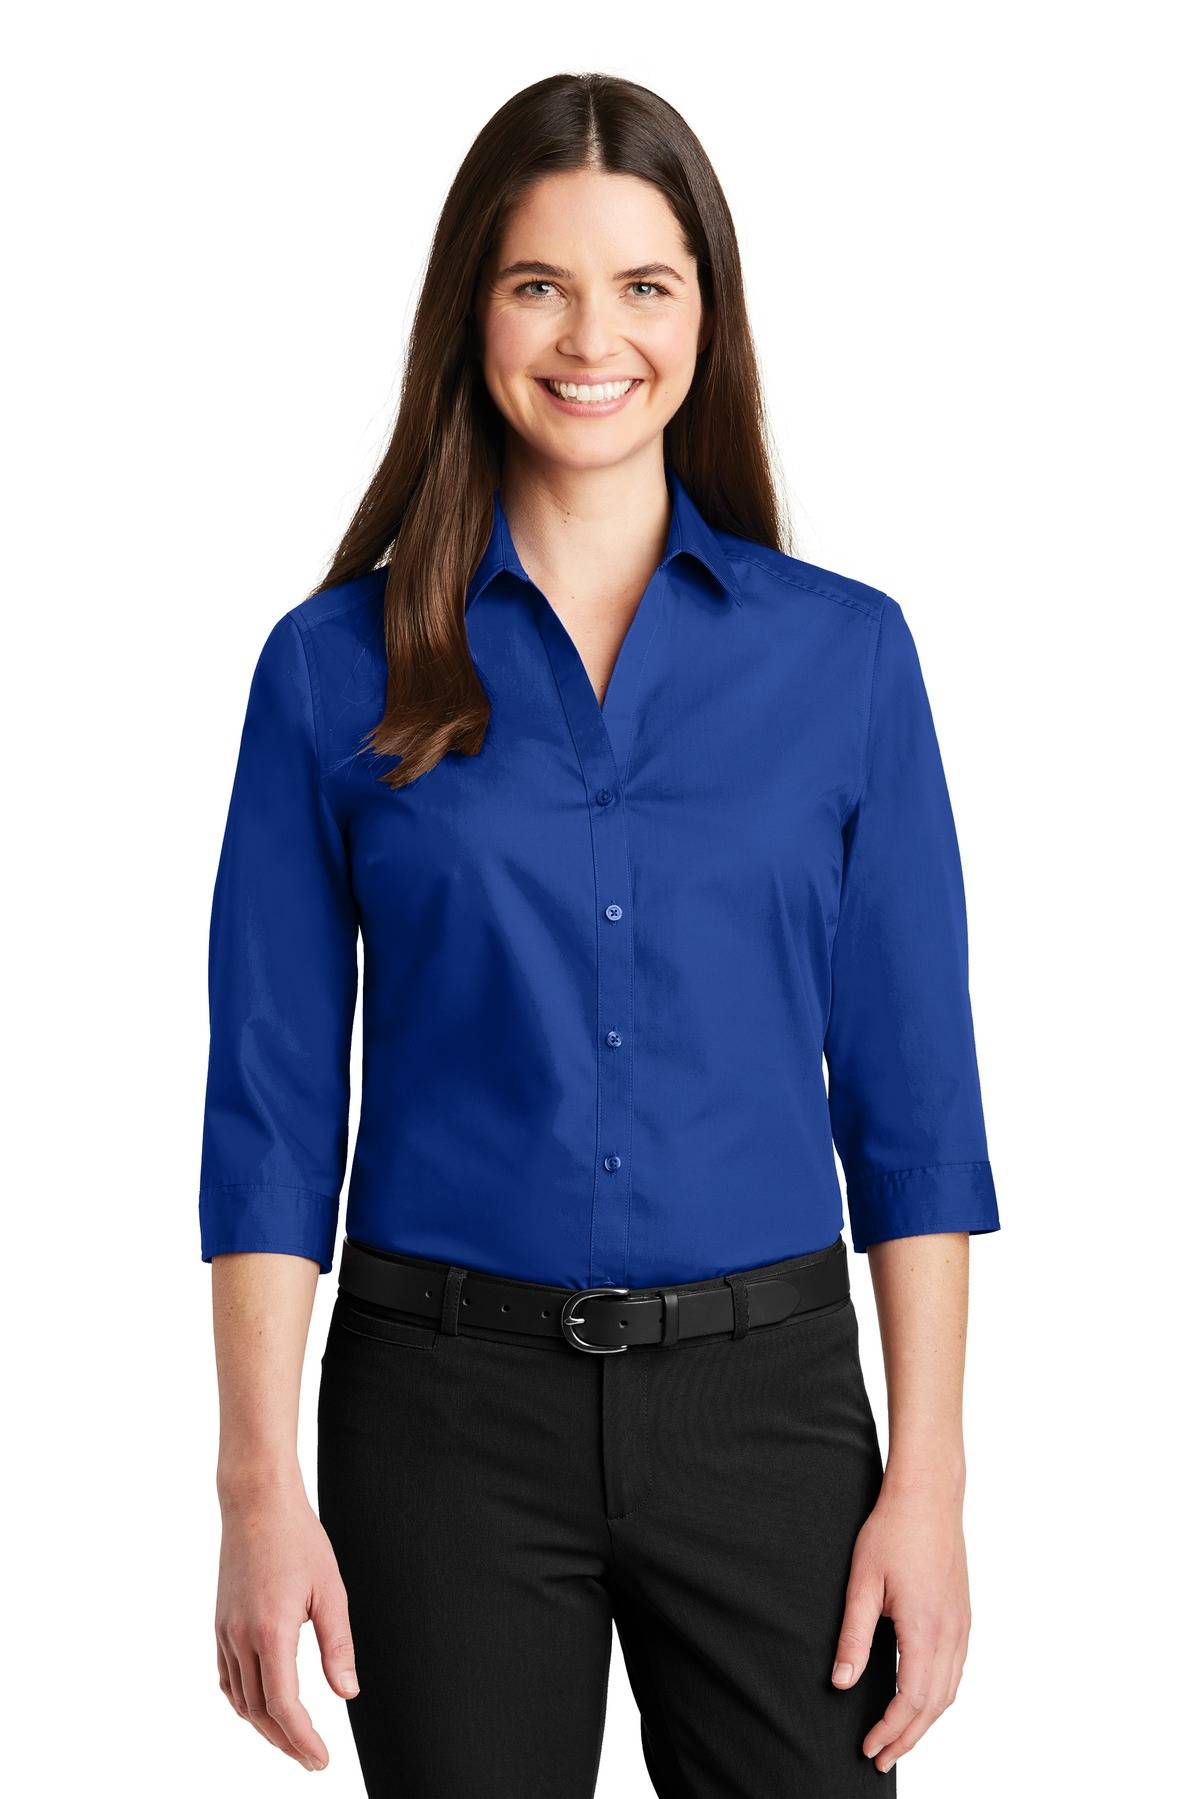 Port Authority LW102 Womens 3/4 Sleeve Lightweight Easy Care Carefree Poplin Shirt Dress Shirt